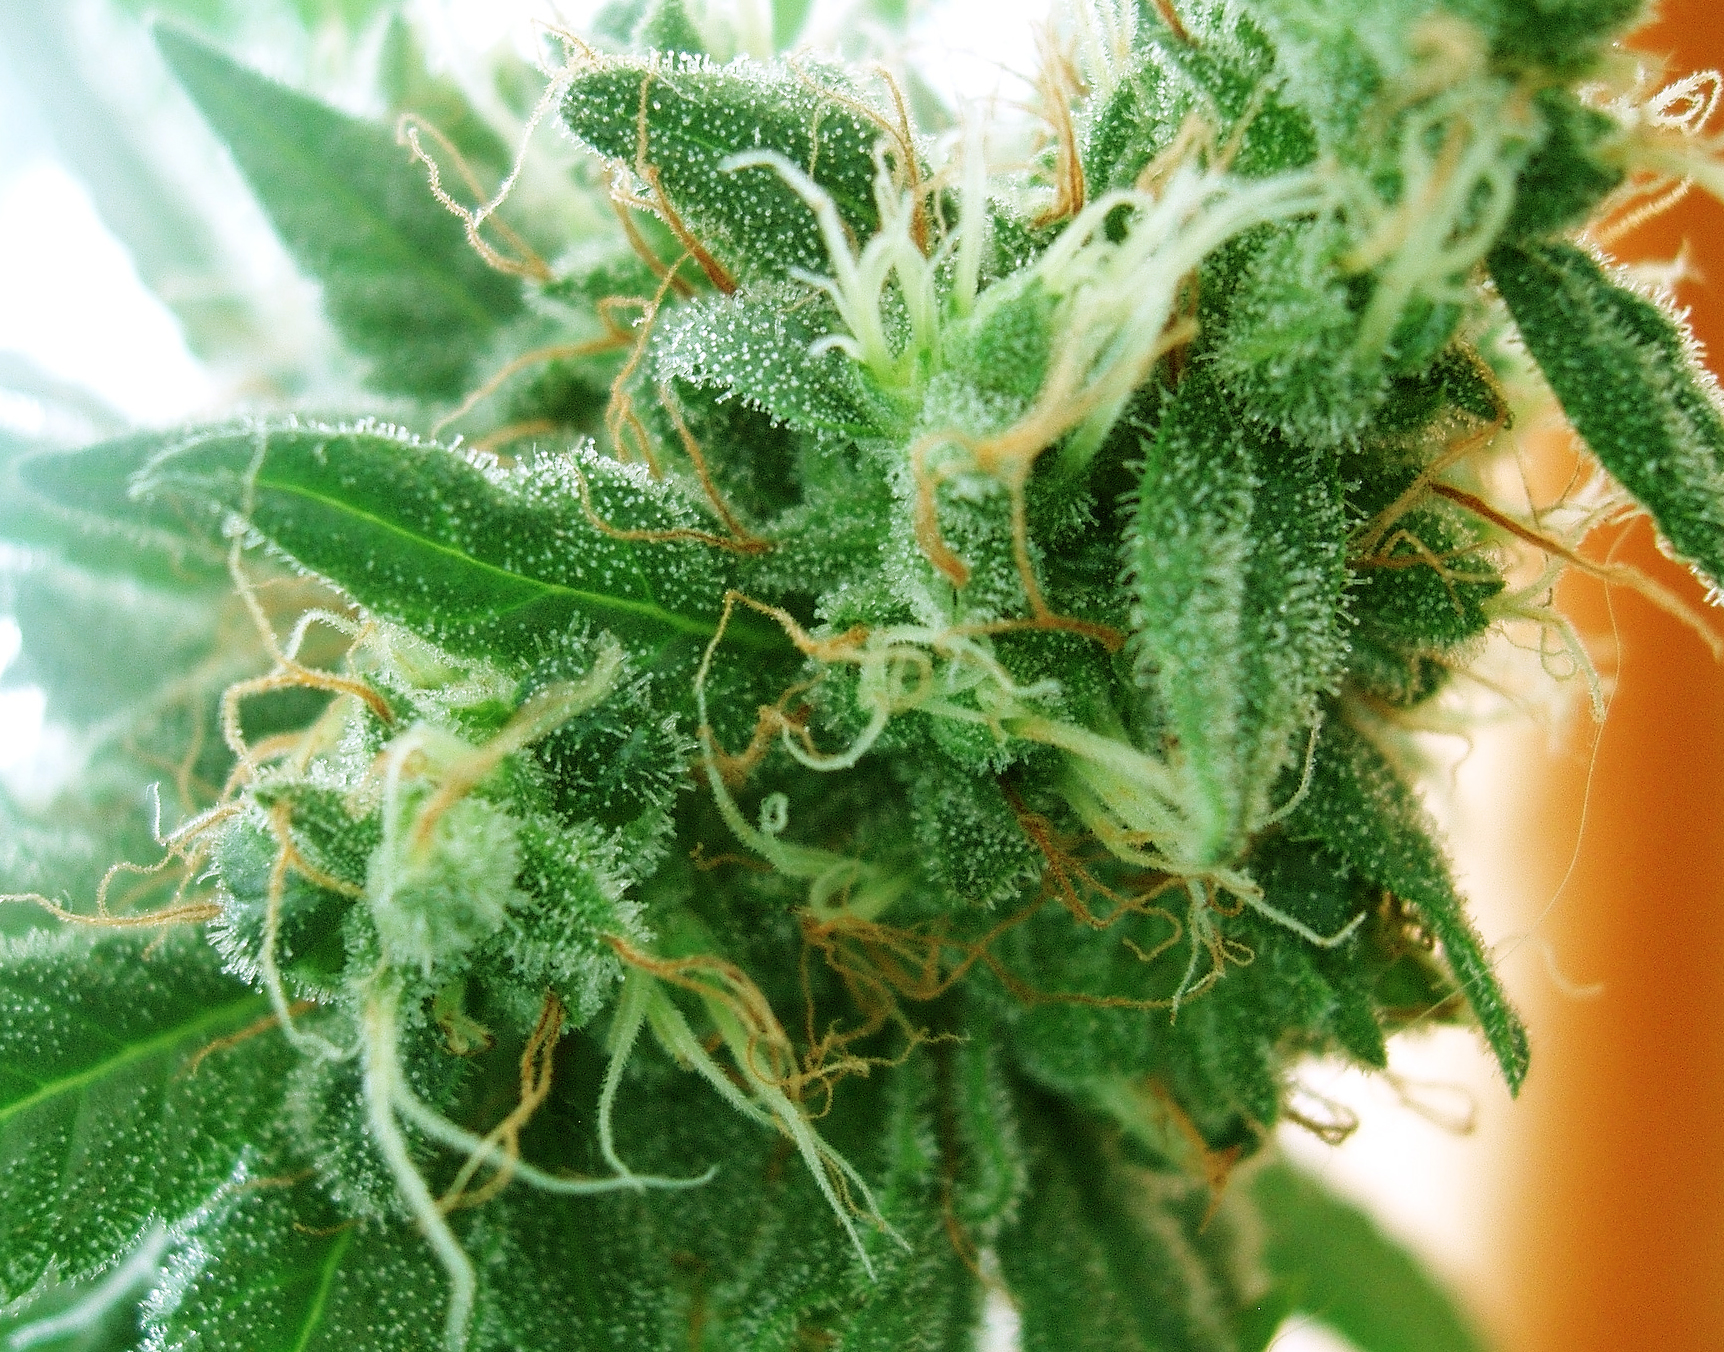 How to grow feminised marijuana seeds